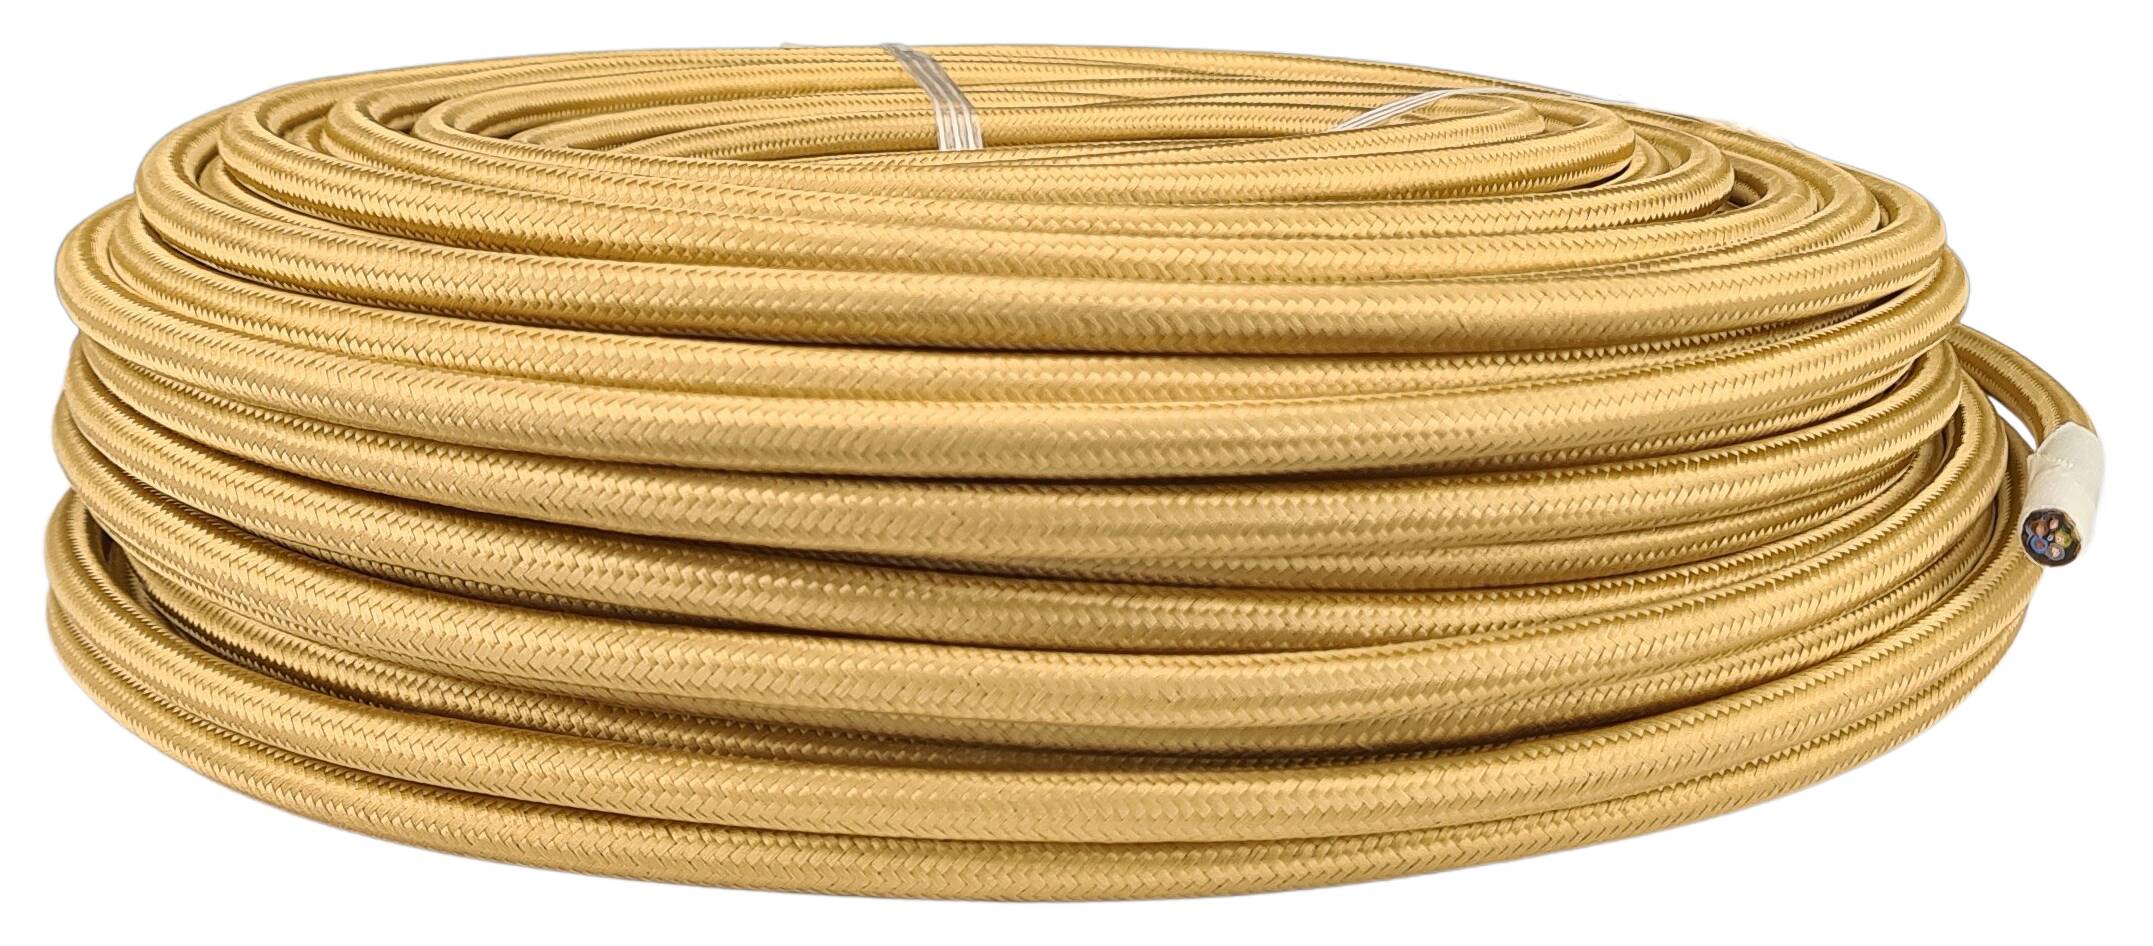 Kabel m. Stahlseil 5G 0,75 HO5VV-F PVC  textilummantelt RAL 1036 gold glänzend